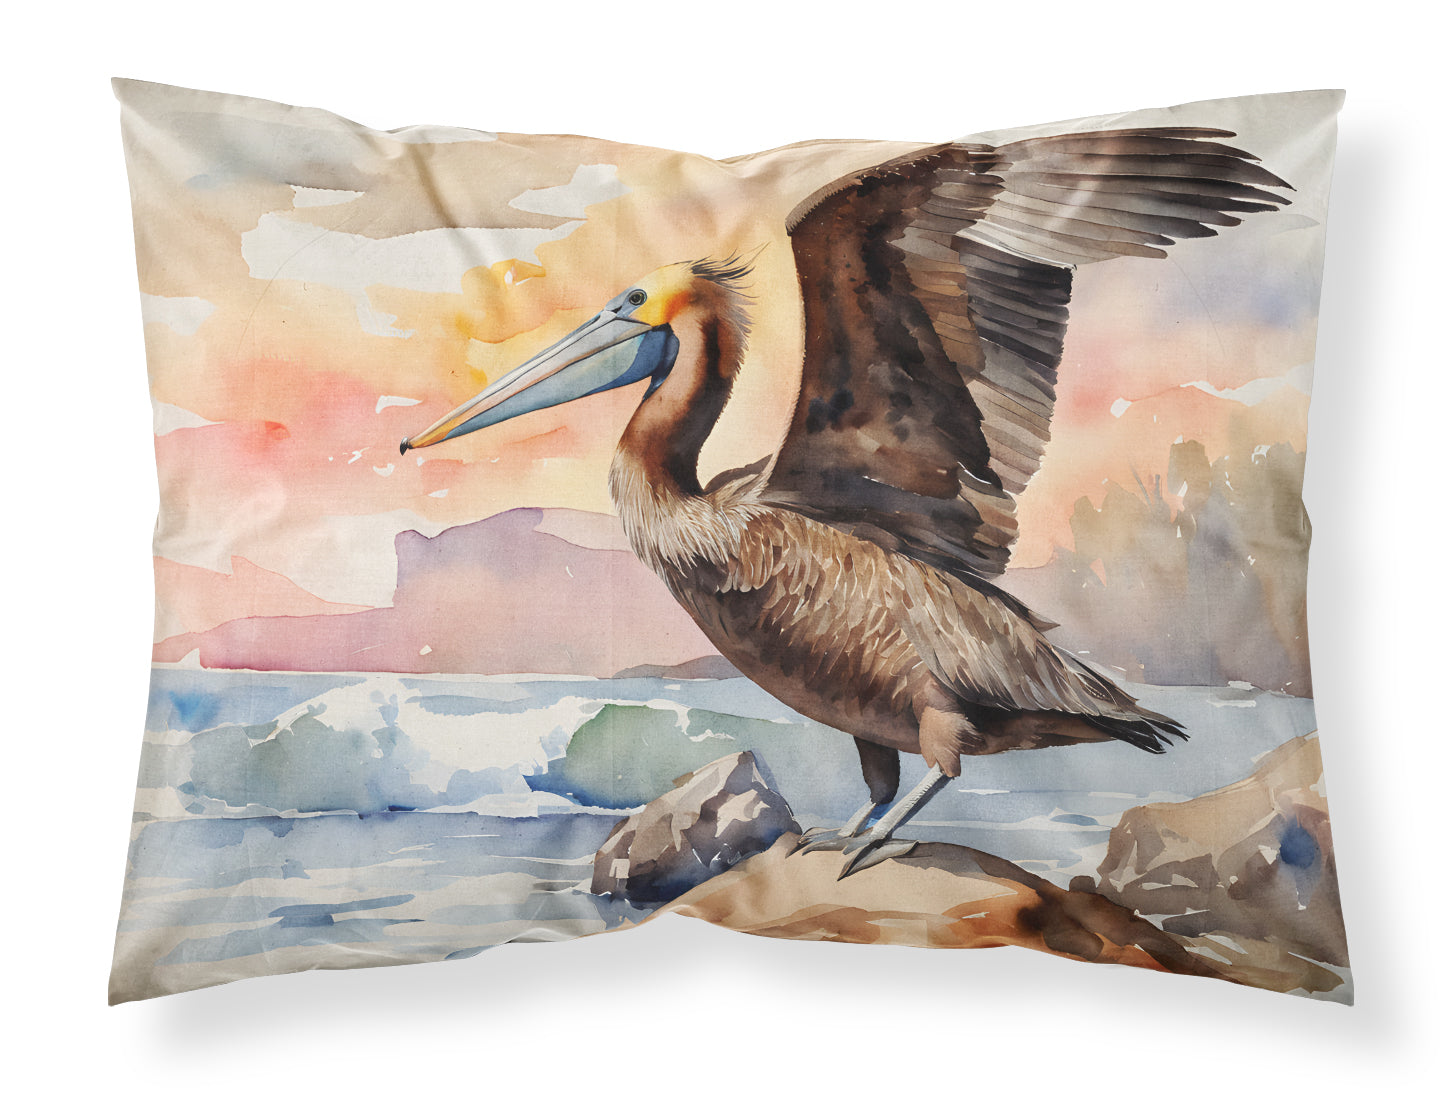 Buy this Pelican Standard Pillowcase